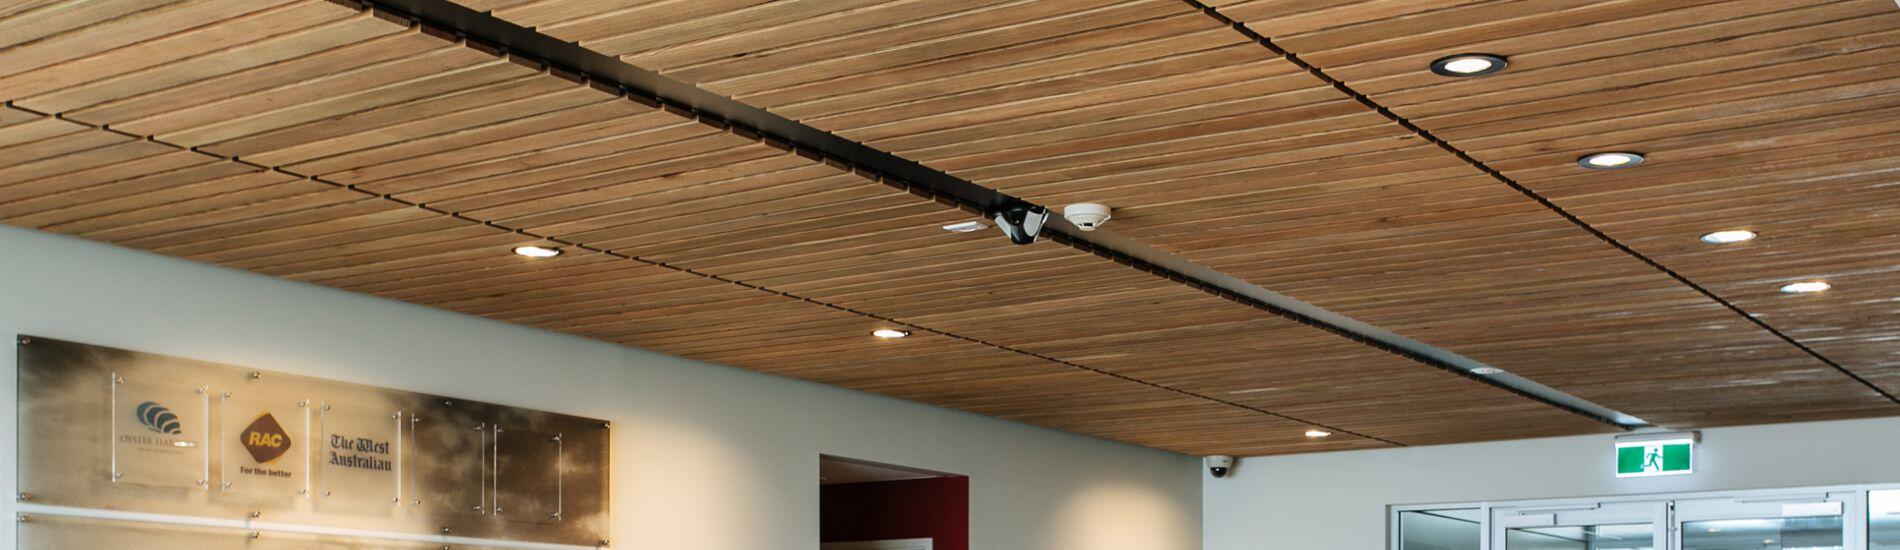 DRIFTWOOD Rustic Timber SUPATILE SLAT Ceiling Tiles Deliniate Aesthetic Mood in Memorial Museum